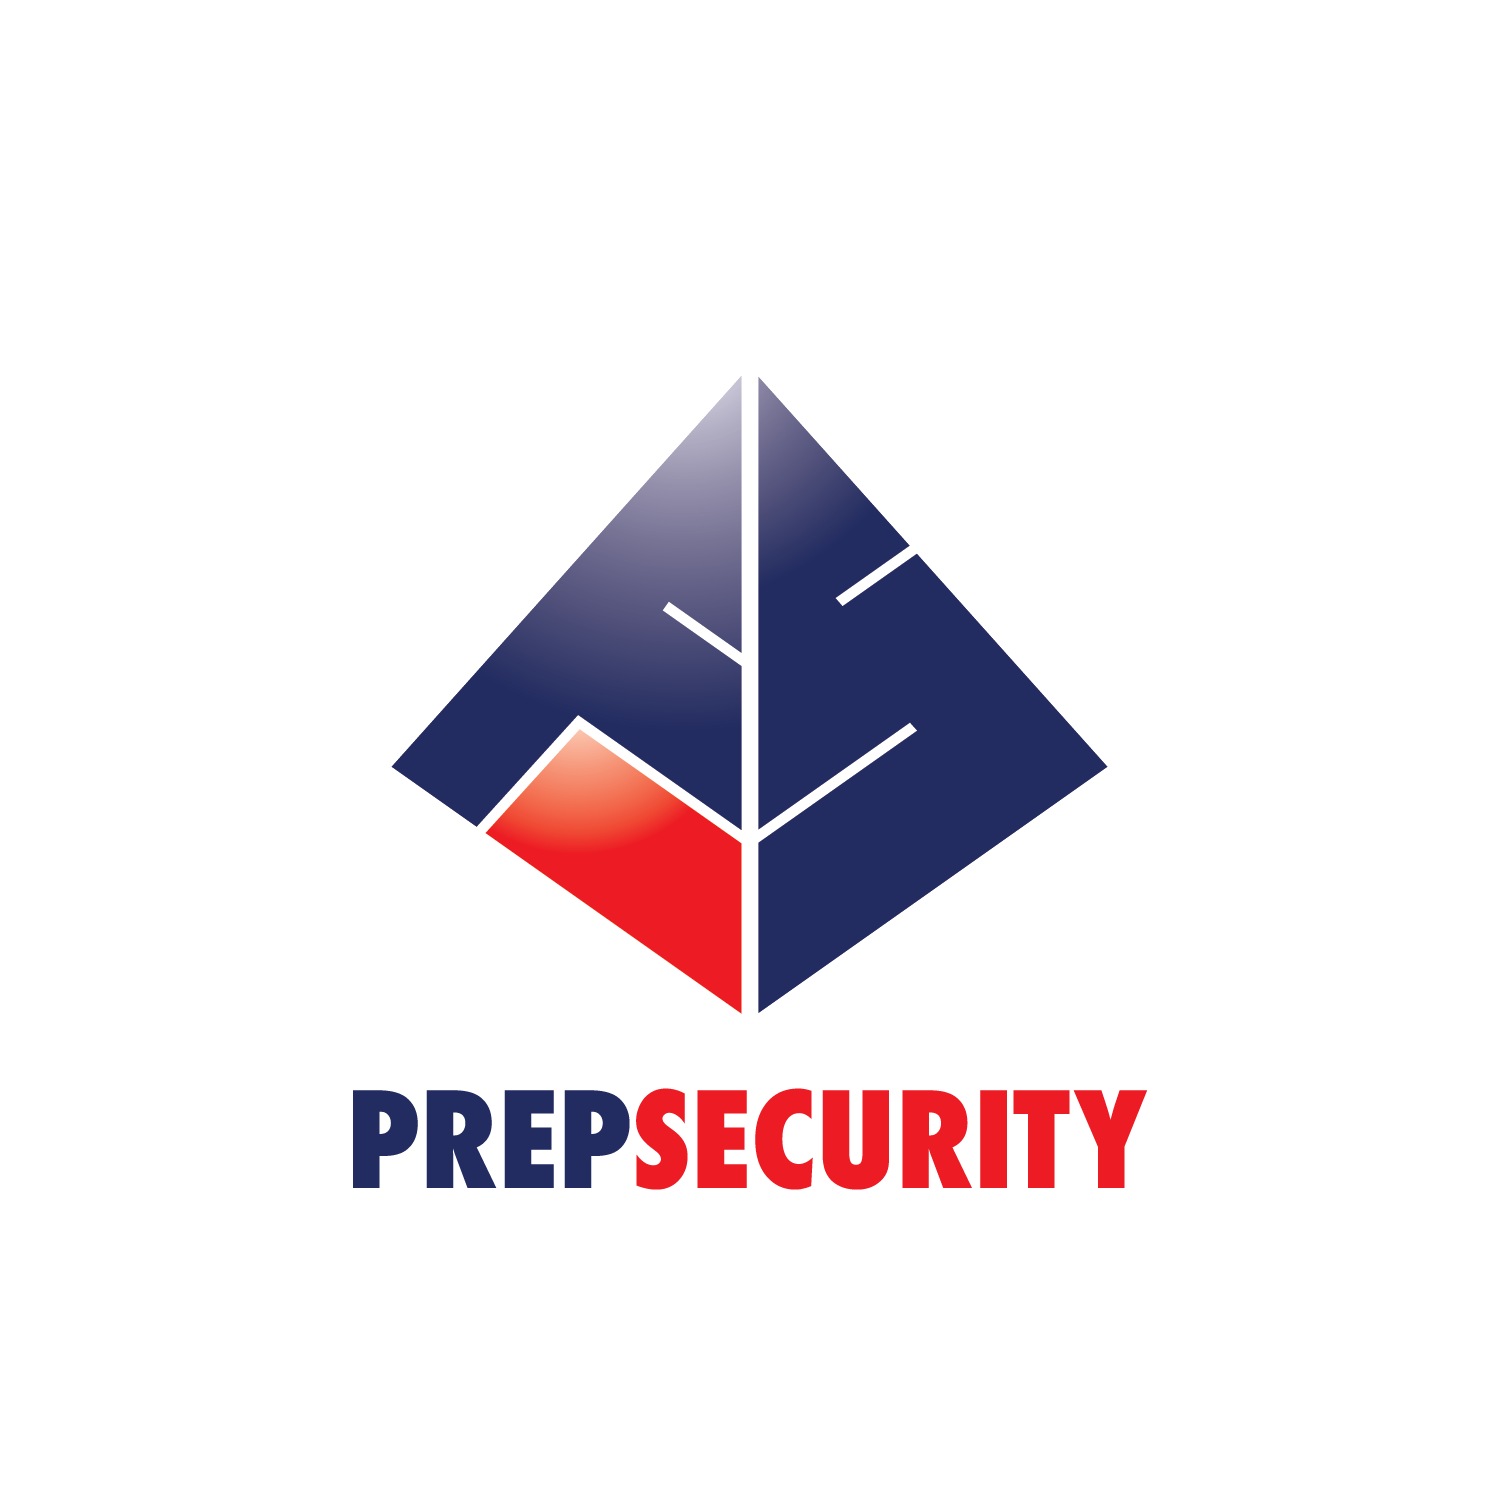 Prep Security 502 Earth City Expy Ste 200, Earth City Missouri 63045